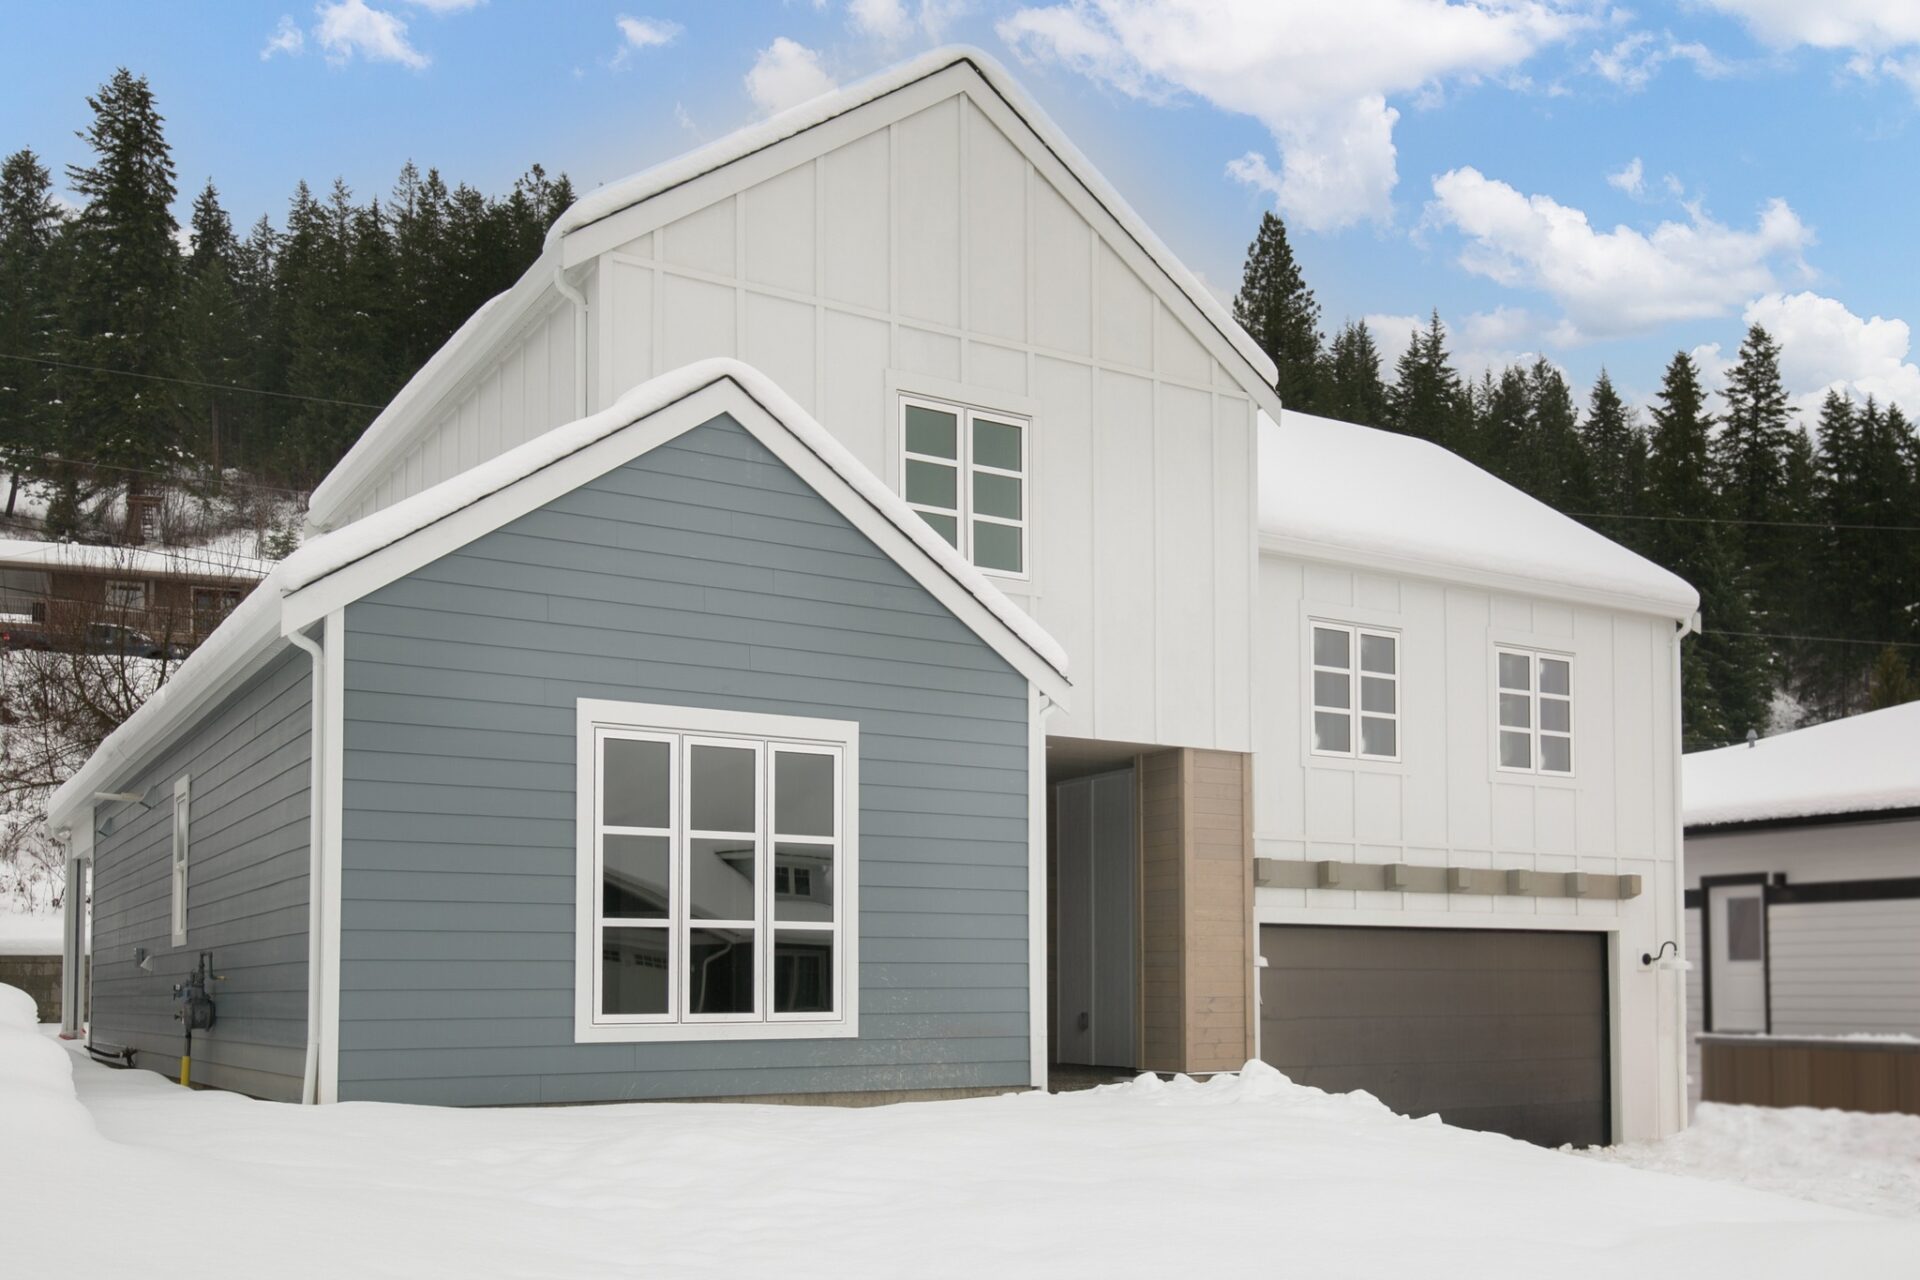 Custom home, winter scene, white and grey siding with wood finishing.